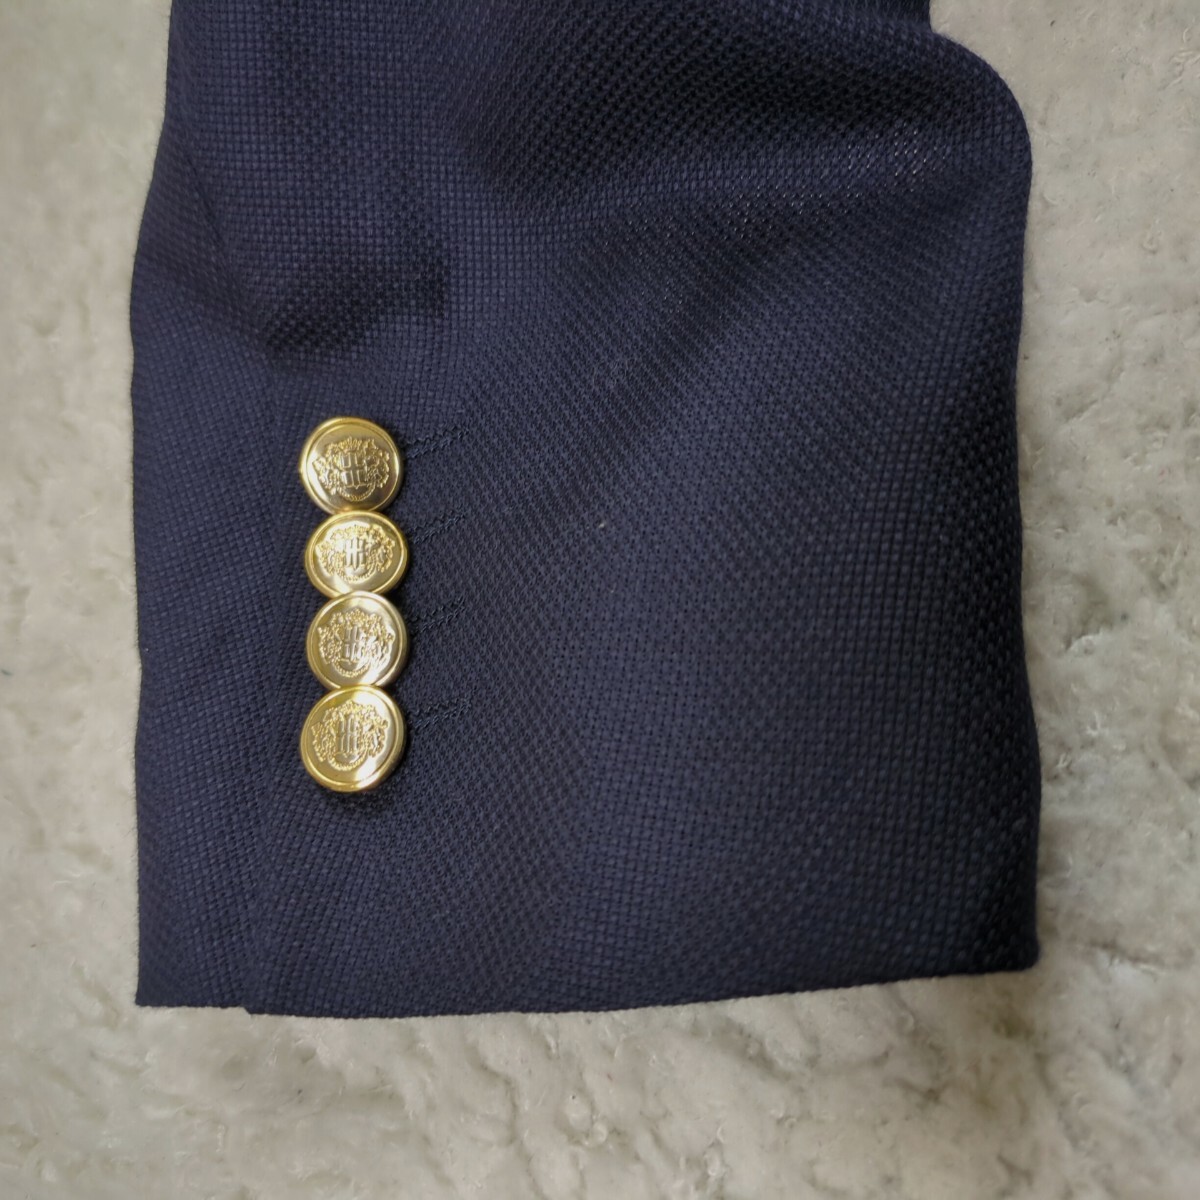 ORIHICA/オリヒカ イタリア生地 3Lサイズ 金ボタン テーラードジャケット/ブレザー 紺ブレ アウター 濃紺ネイビーカラー 紳士服 メンズの画像4